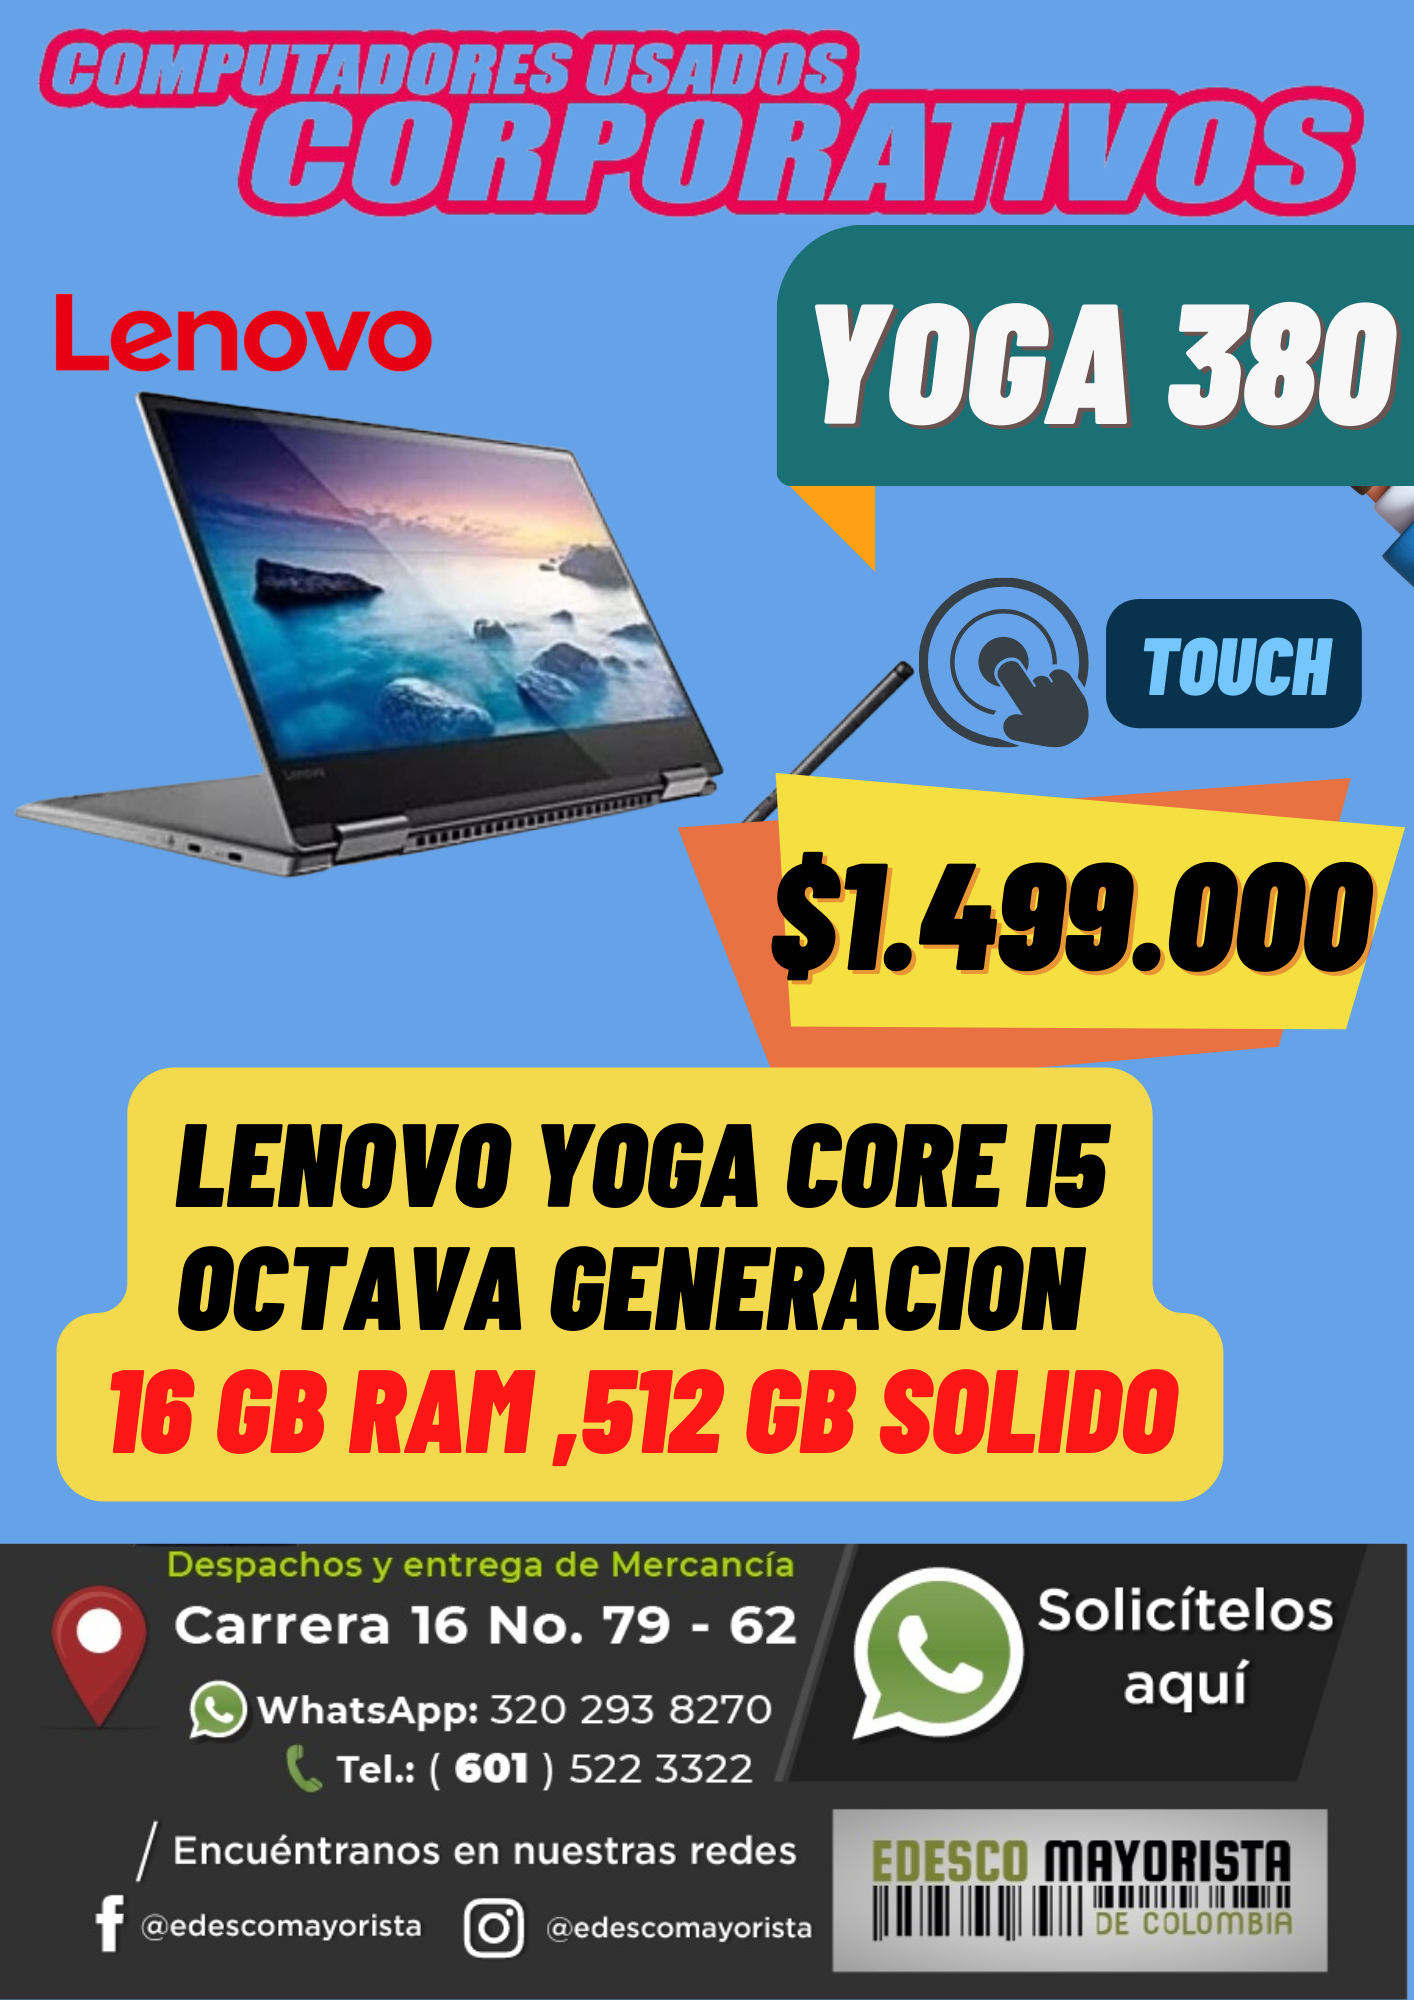 Lenovo Yoga X380